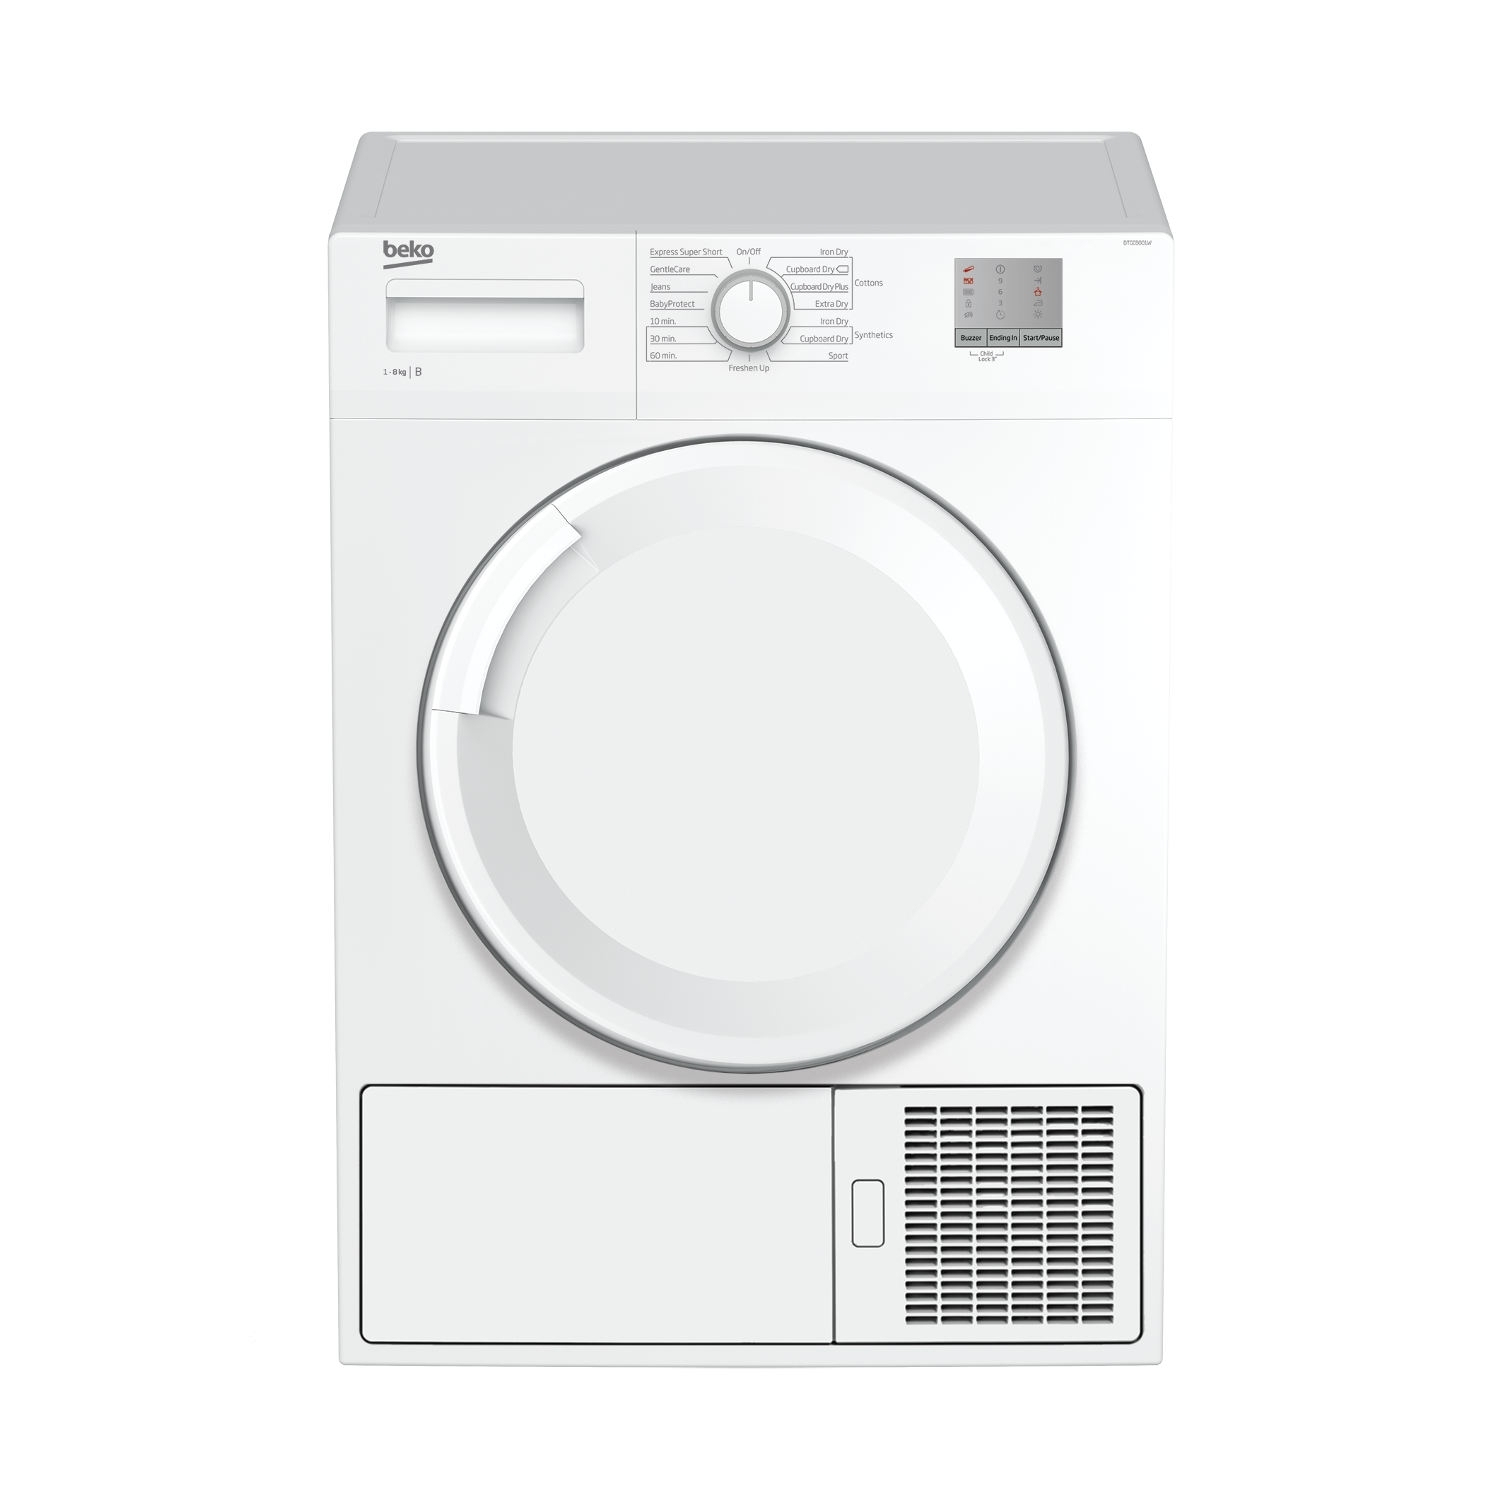 Beko 8kg Condenser Tumble Dryer - White - B Rated - 9